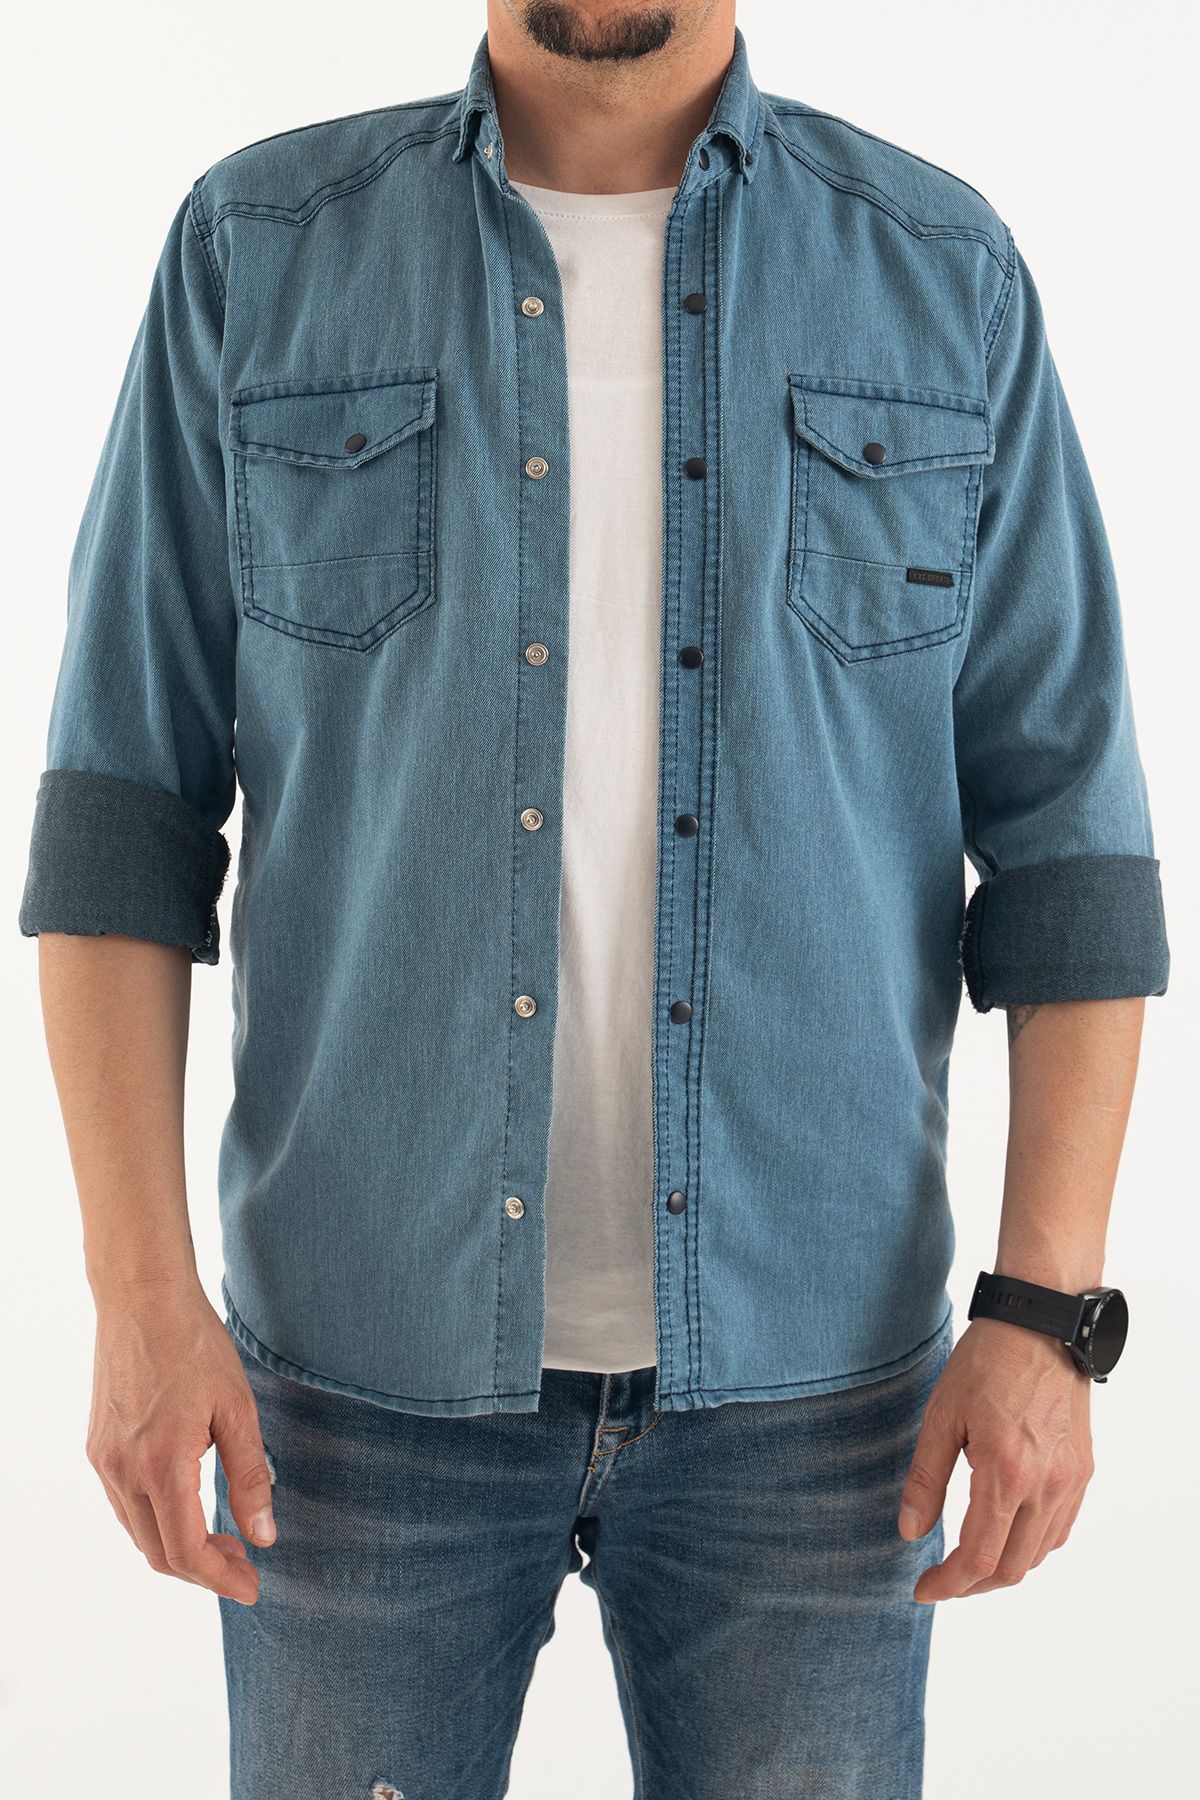 YXC Trend Maker Erkek Lacivert Slim Fit Dar Kalıp Pamuklu Kot Gömlek